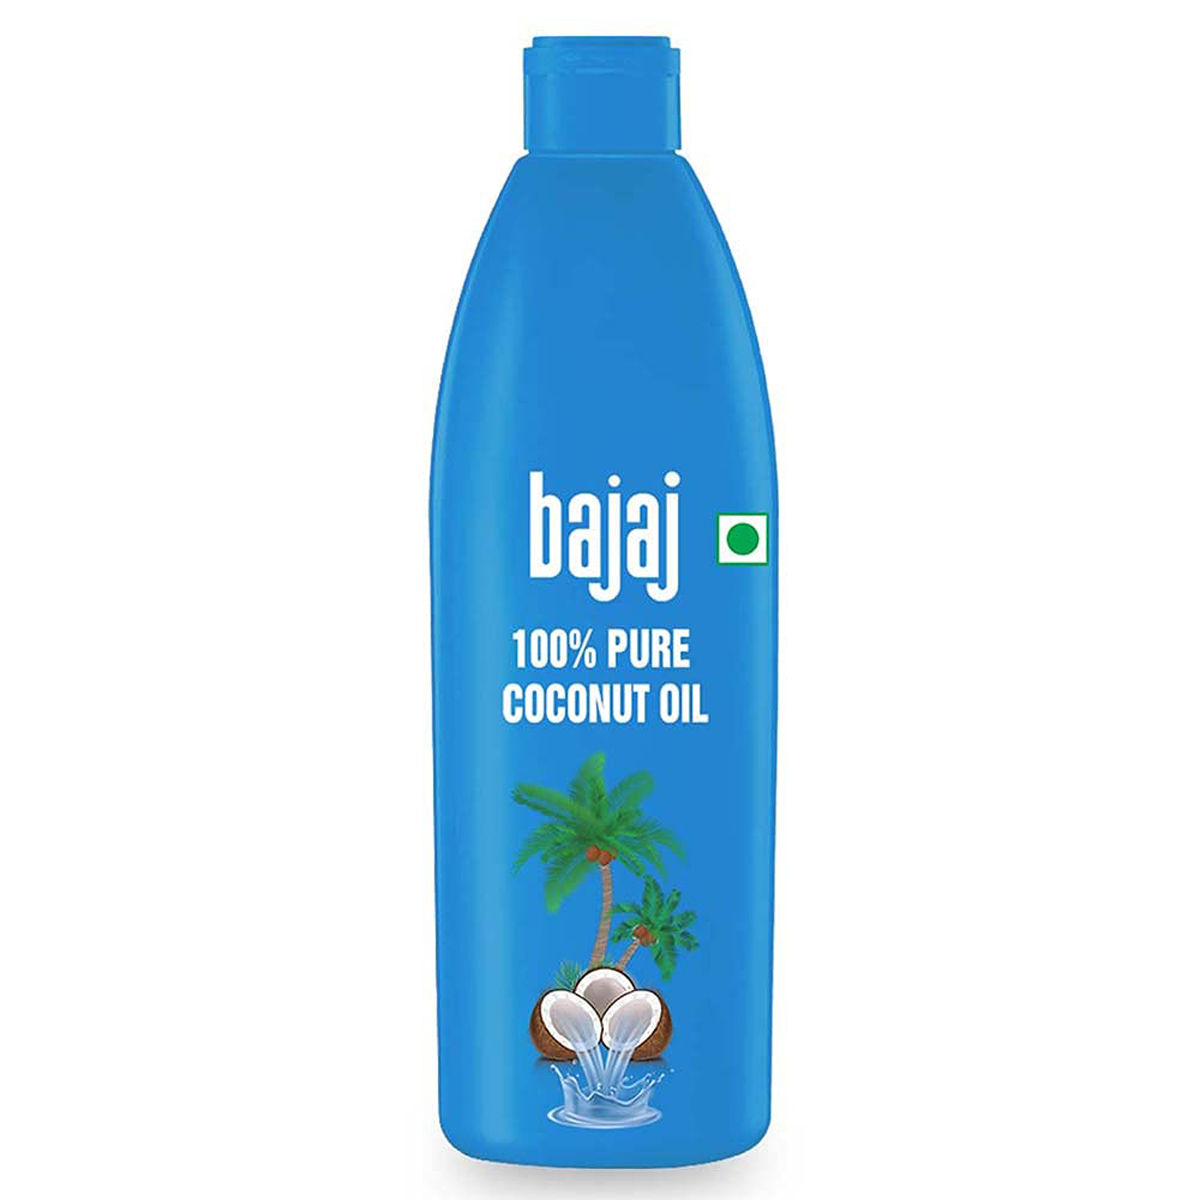 Bajaj Coconut Oil, 600 ml, Pack of 1 